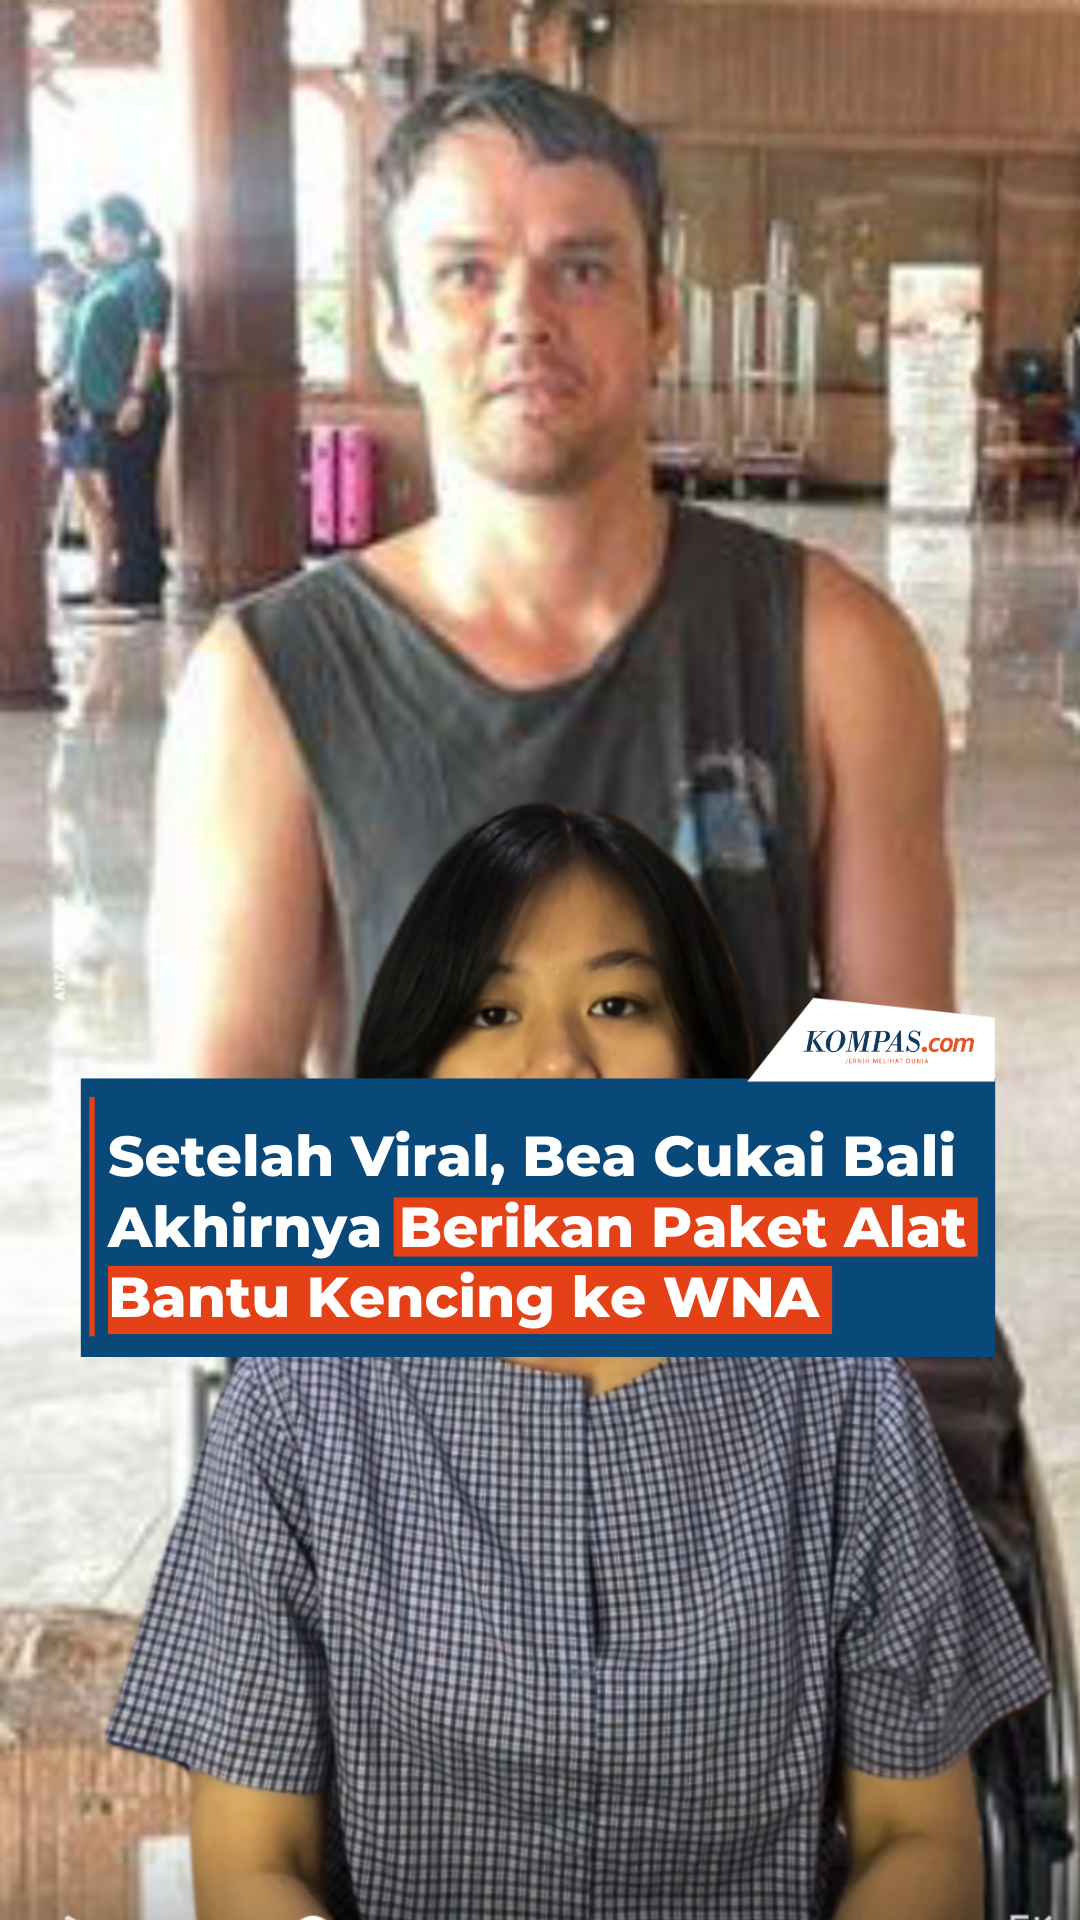 Setelah Viral, Bea Cukai Bali Akhirnya Berikan Paket Alat Bantu Kencing ke WNA